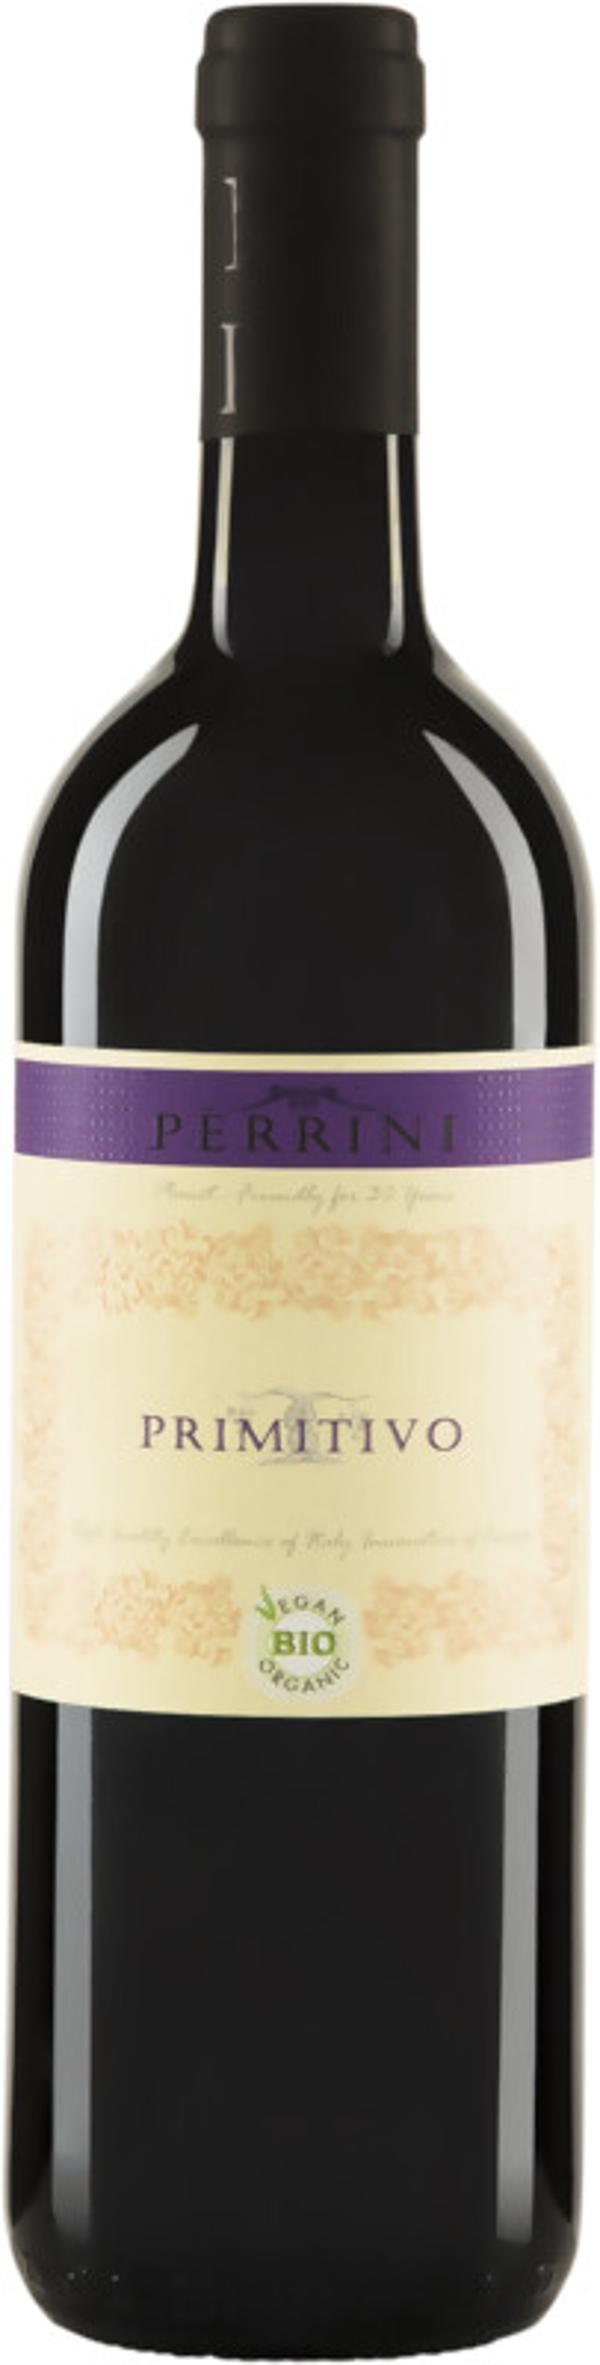 Produktfoto zu Primitivo Puglia IGT Perrini